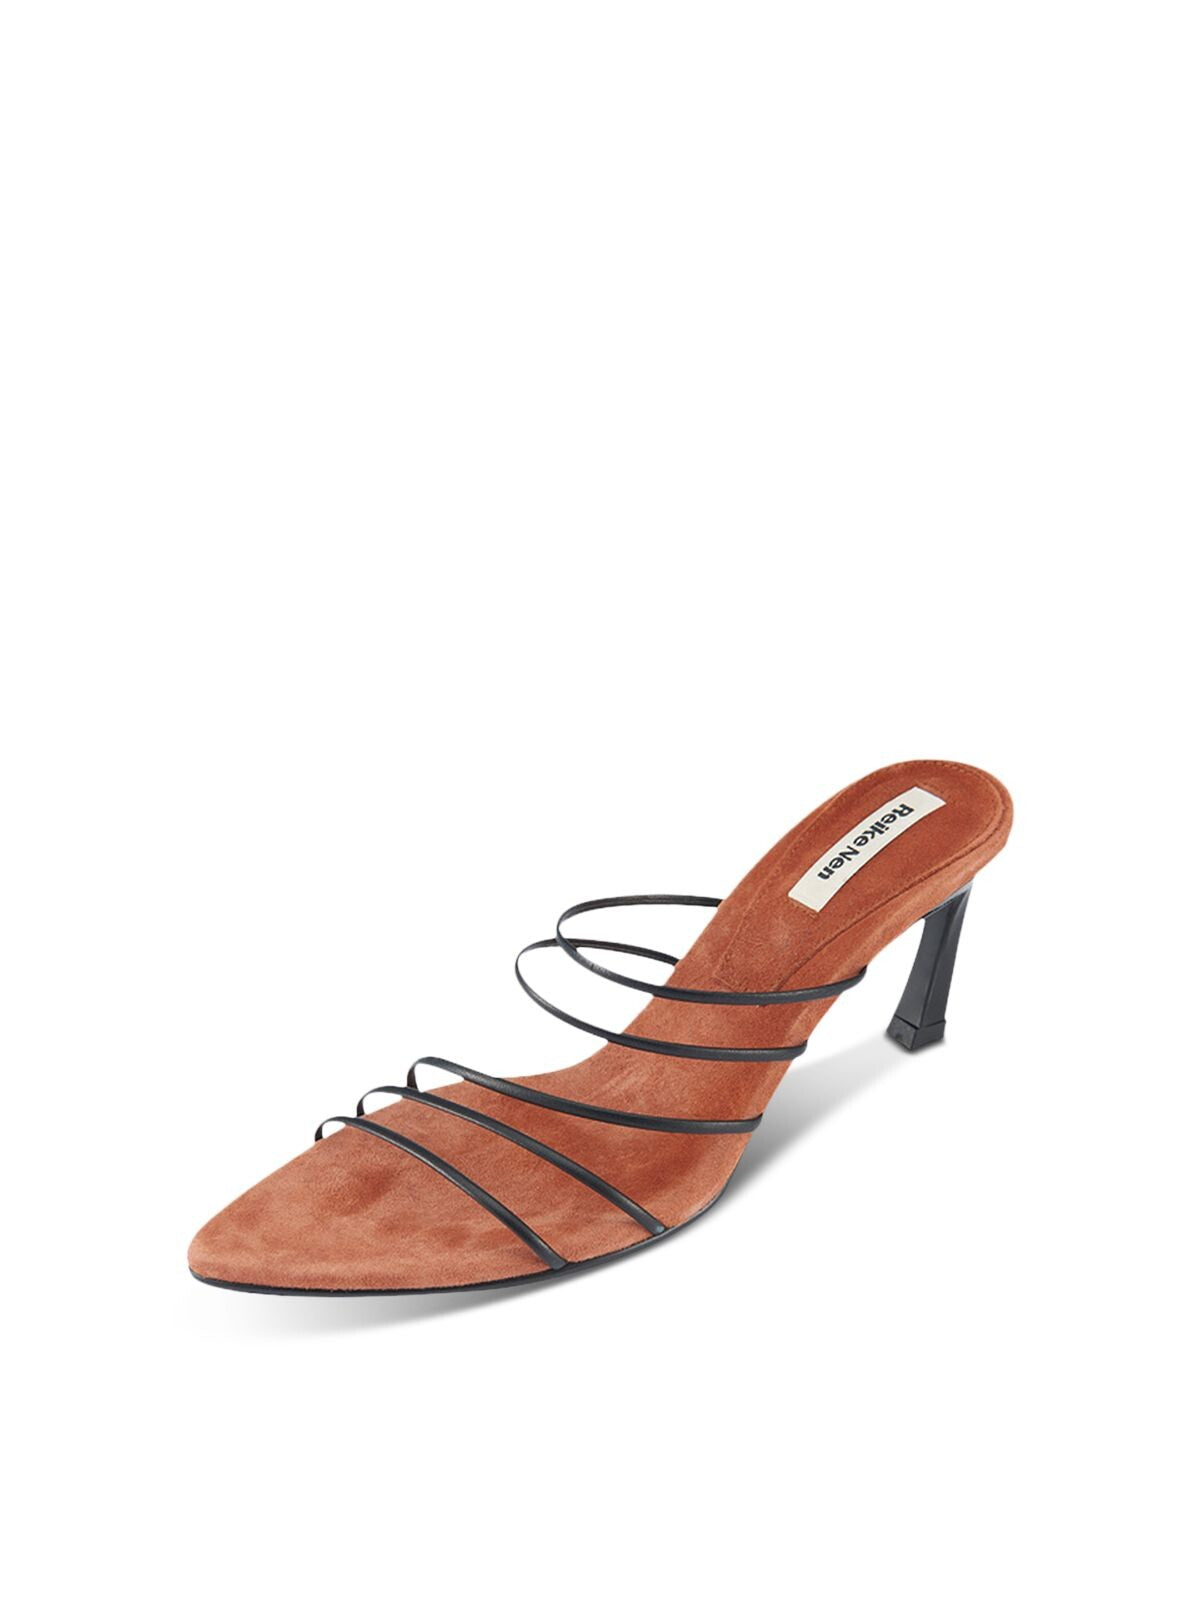 REIKE NEN Womens Black Asymmetrical Strappy Almond Toe Stiletto Slip On Leather Heeled Sandal 38